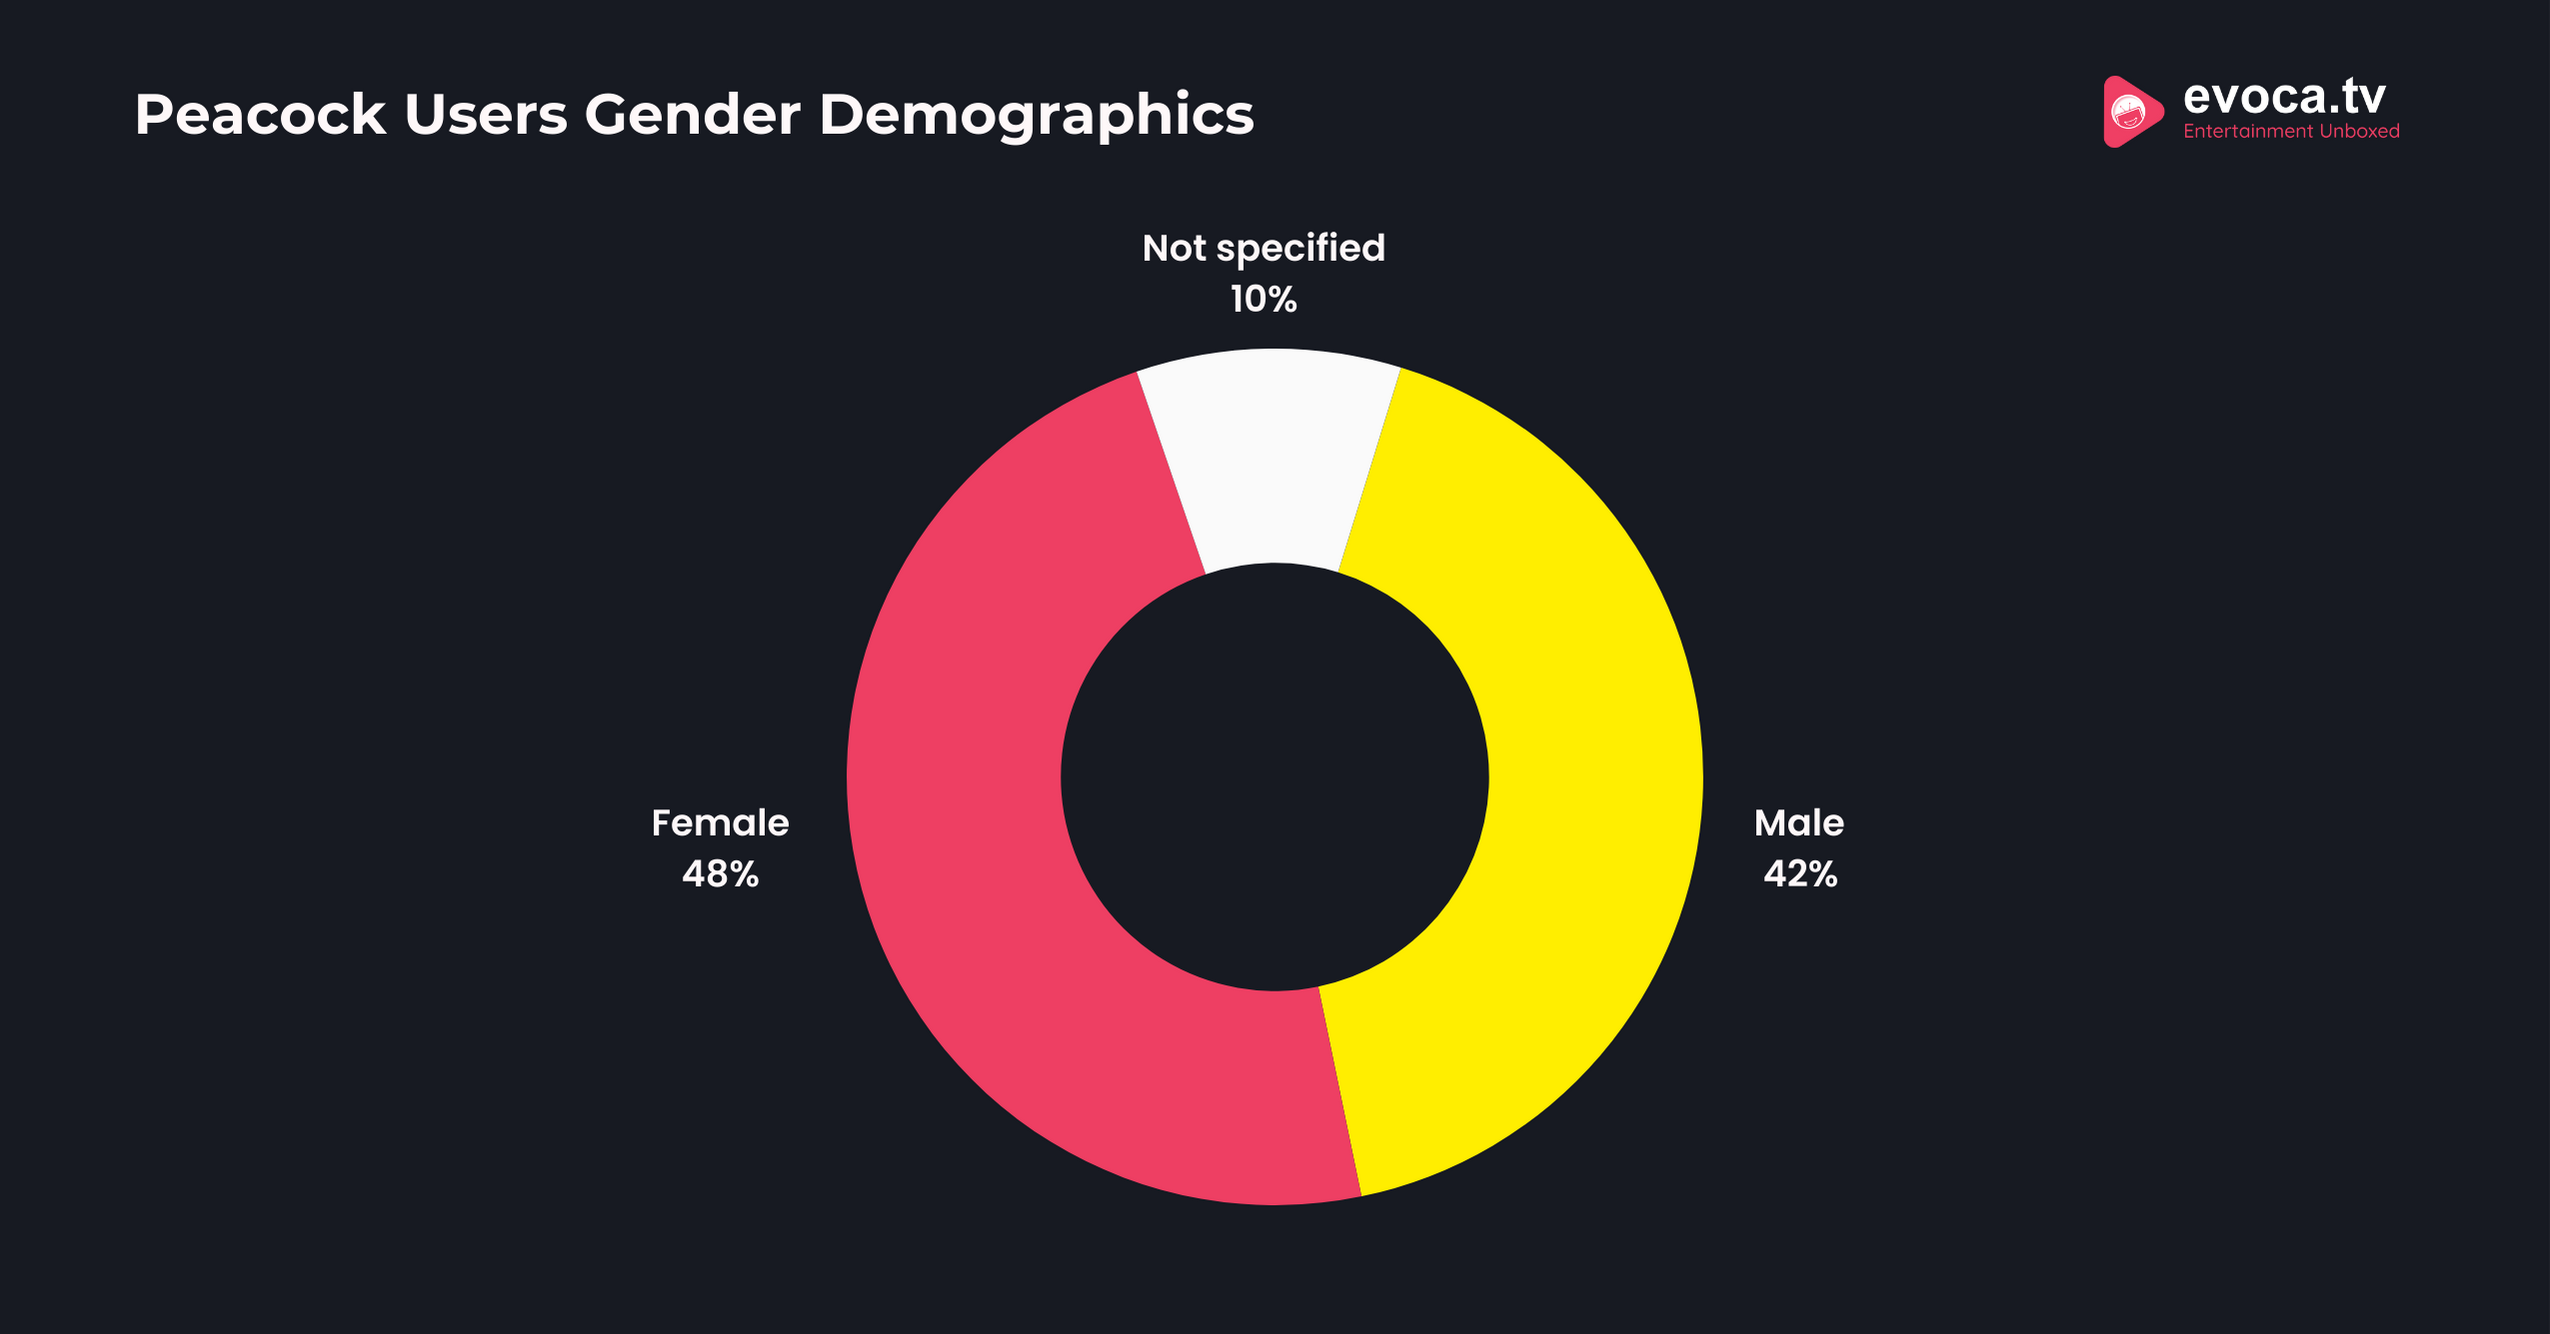 Peacock Users Gender Demographics